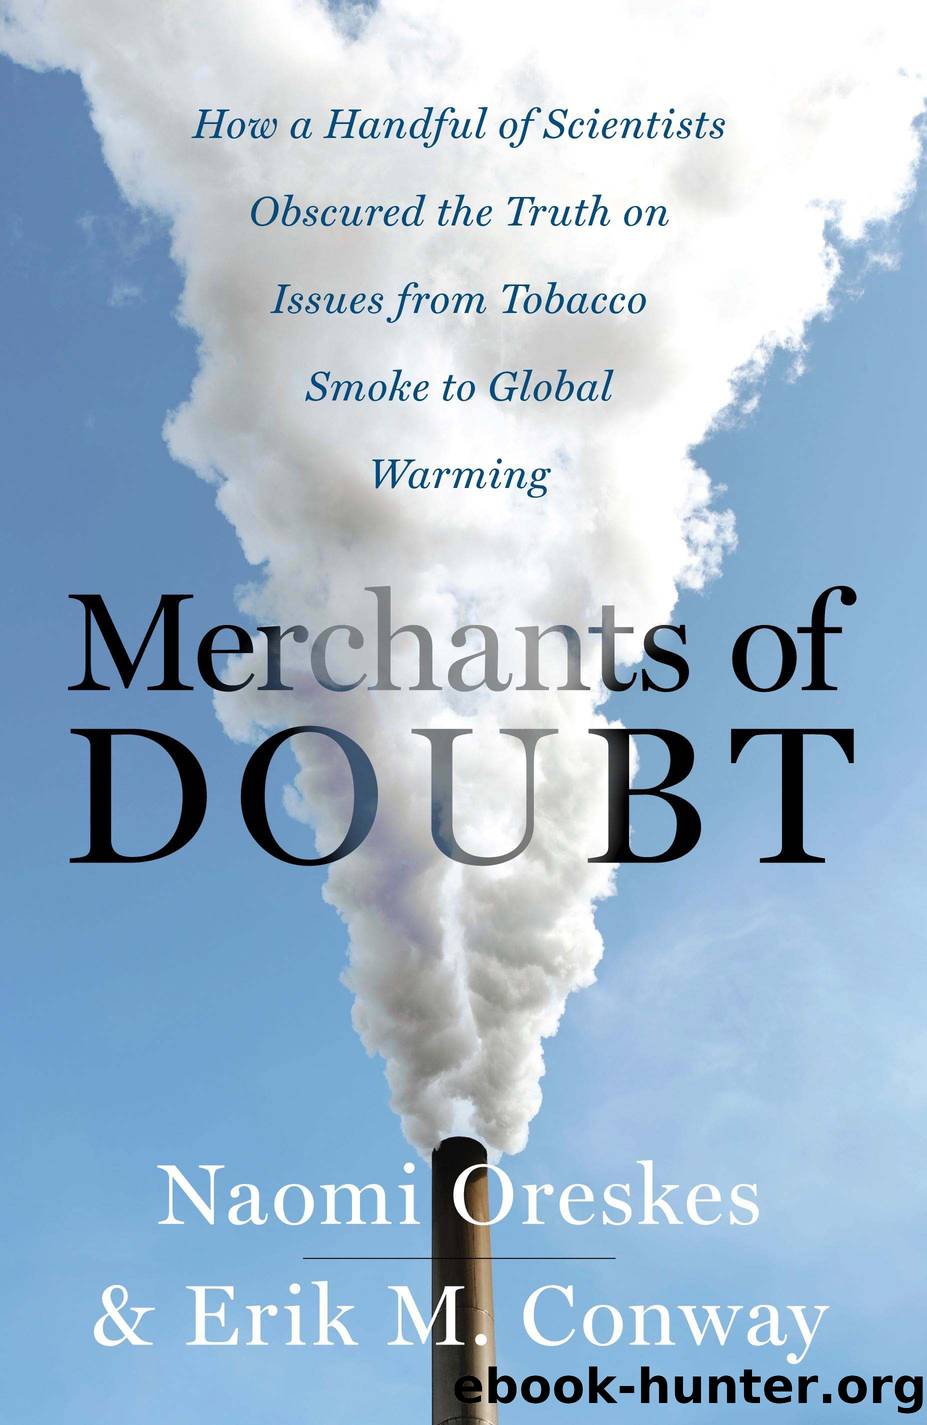 Merchants of Doubt by Erik M. Conway